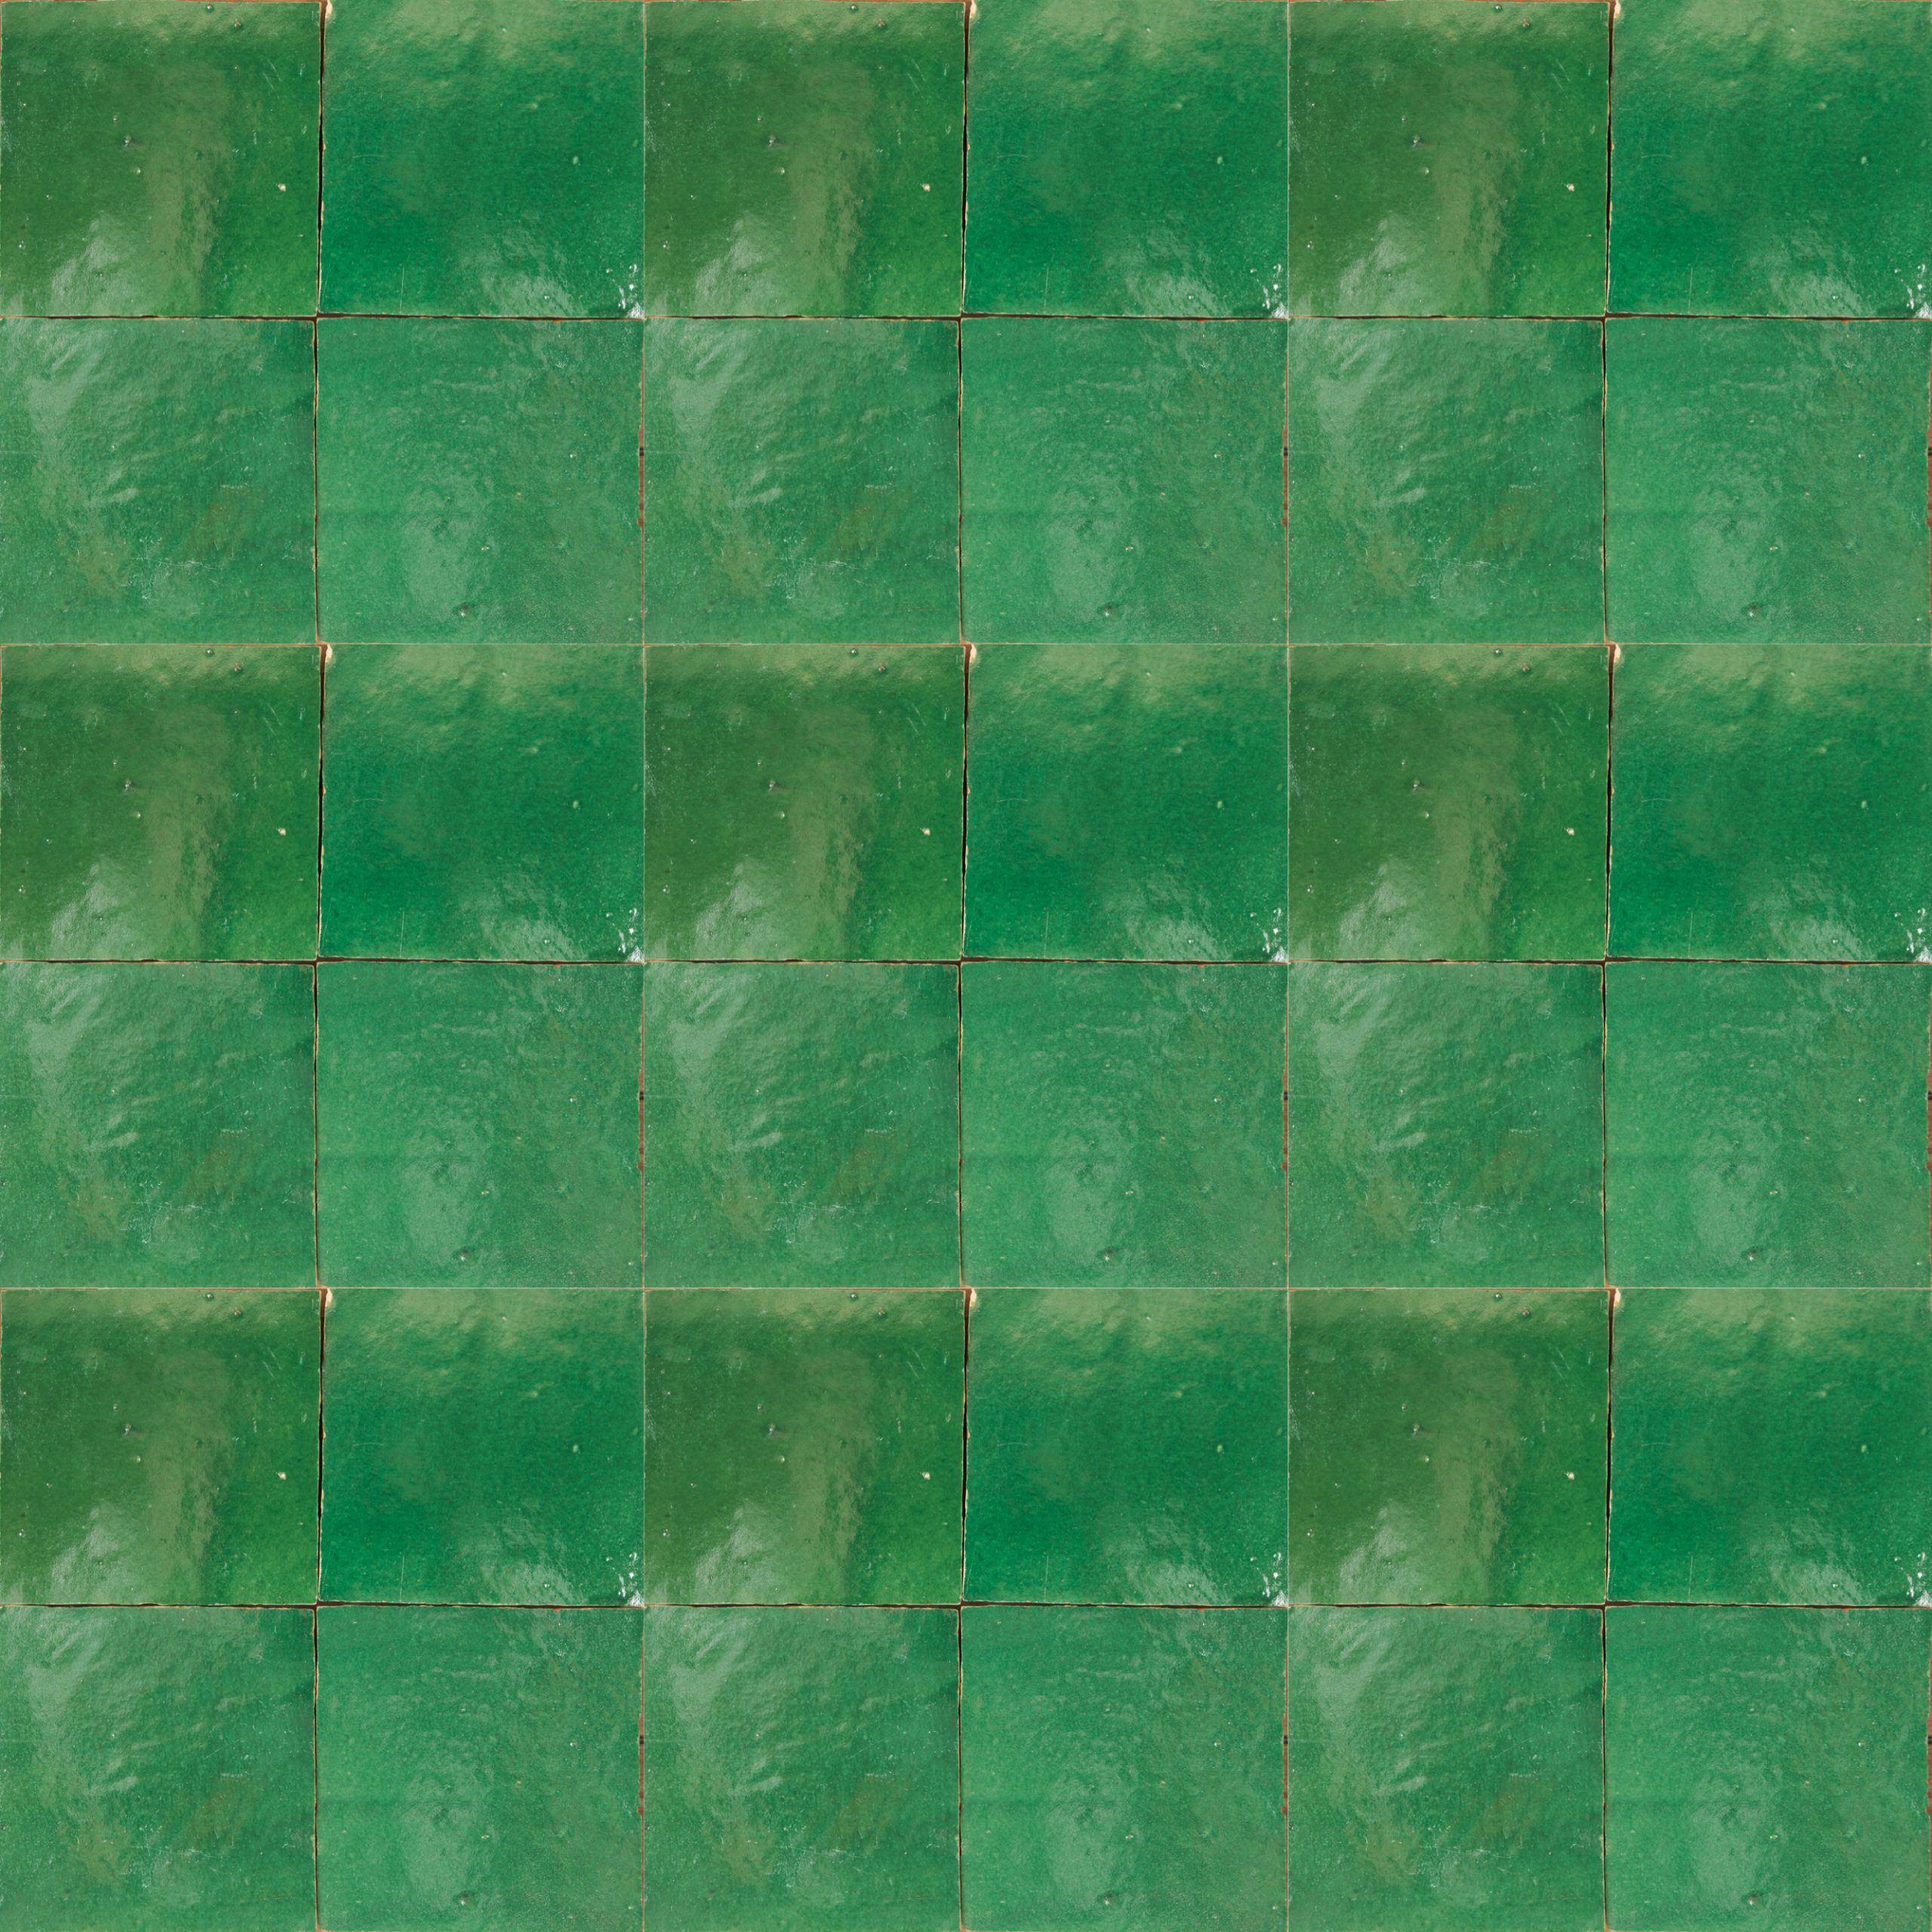 Outdoor Tiles - Emerald Green Glazed